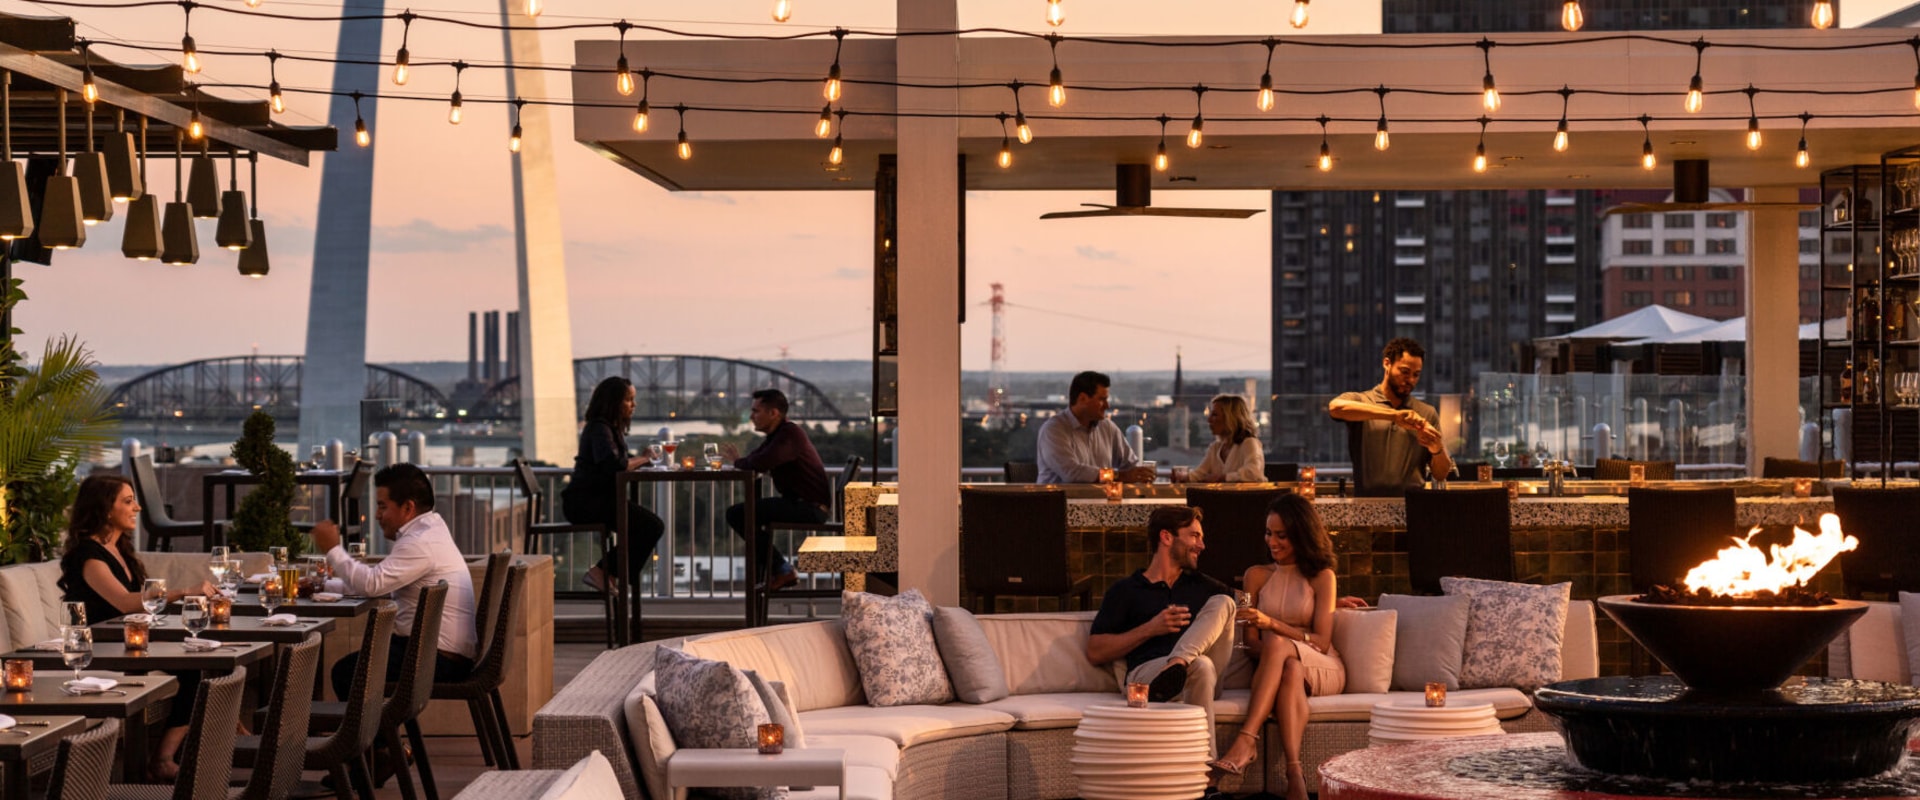 The Best Rooftop Restaurants in St. Louis, Missouri